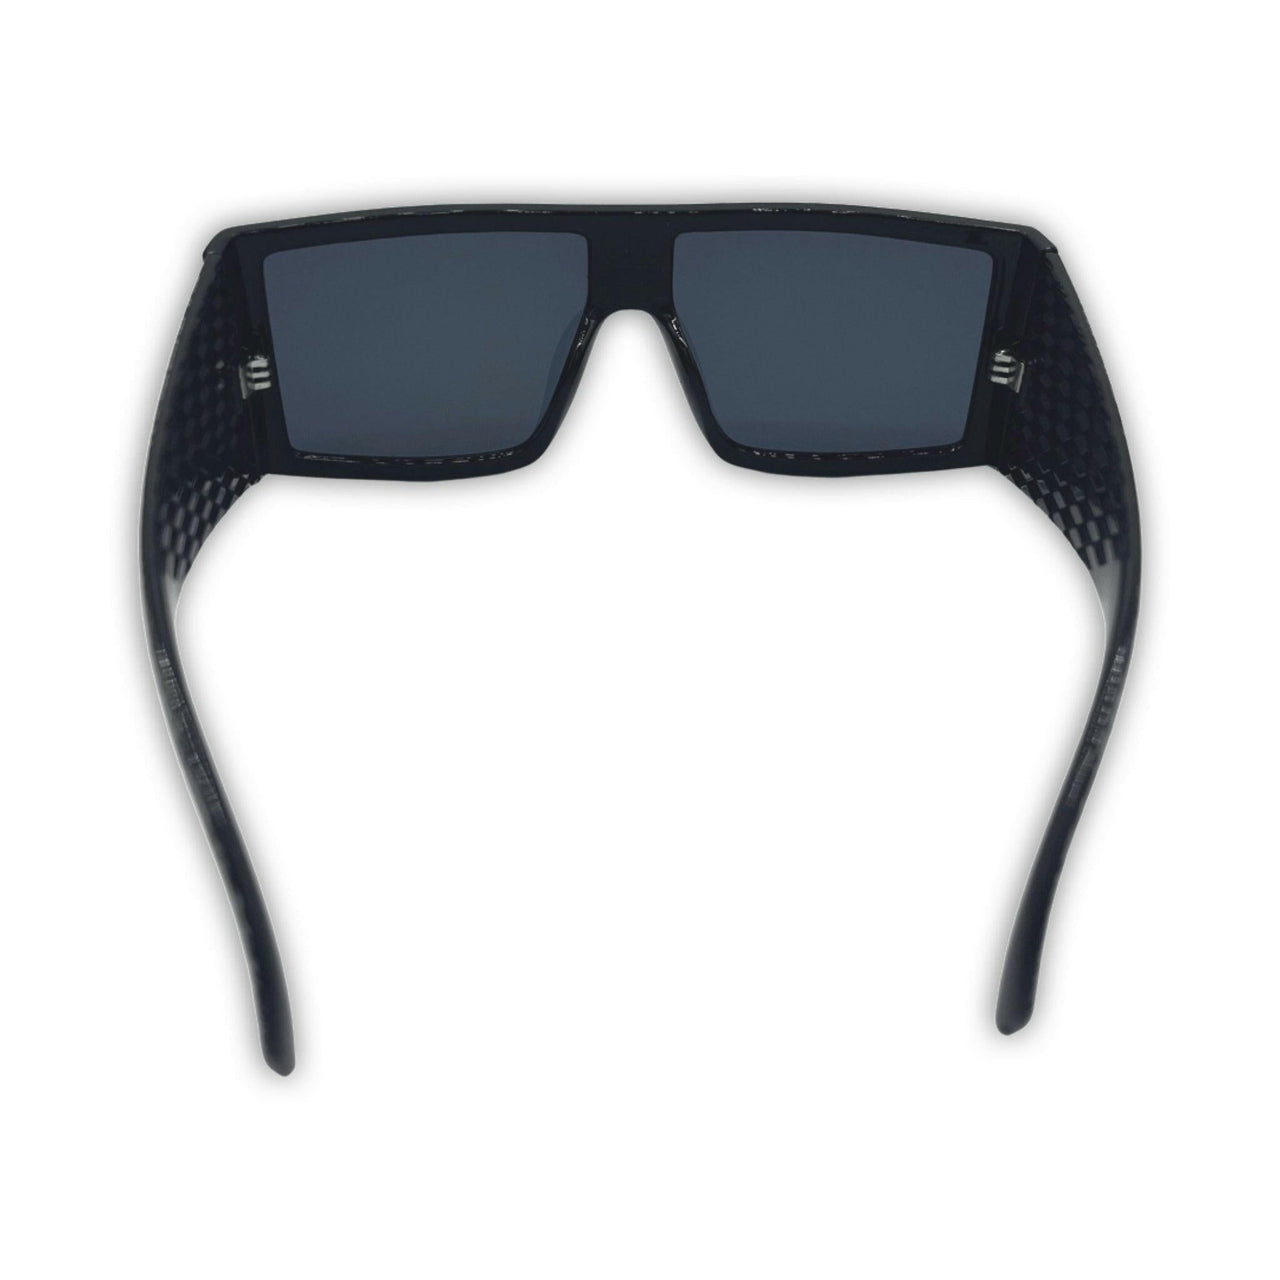 Dana Solid Black Sunglasses